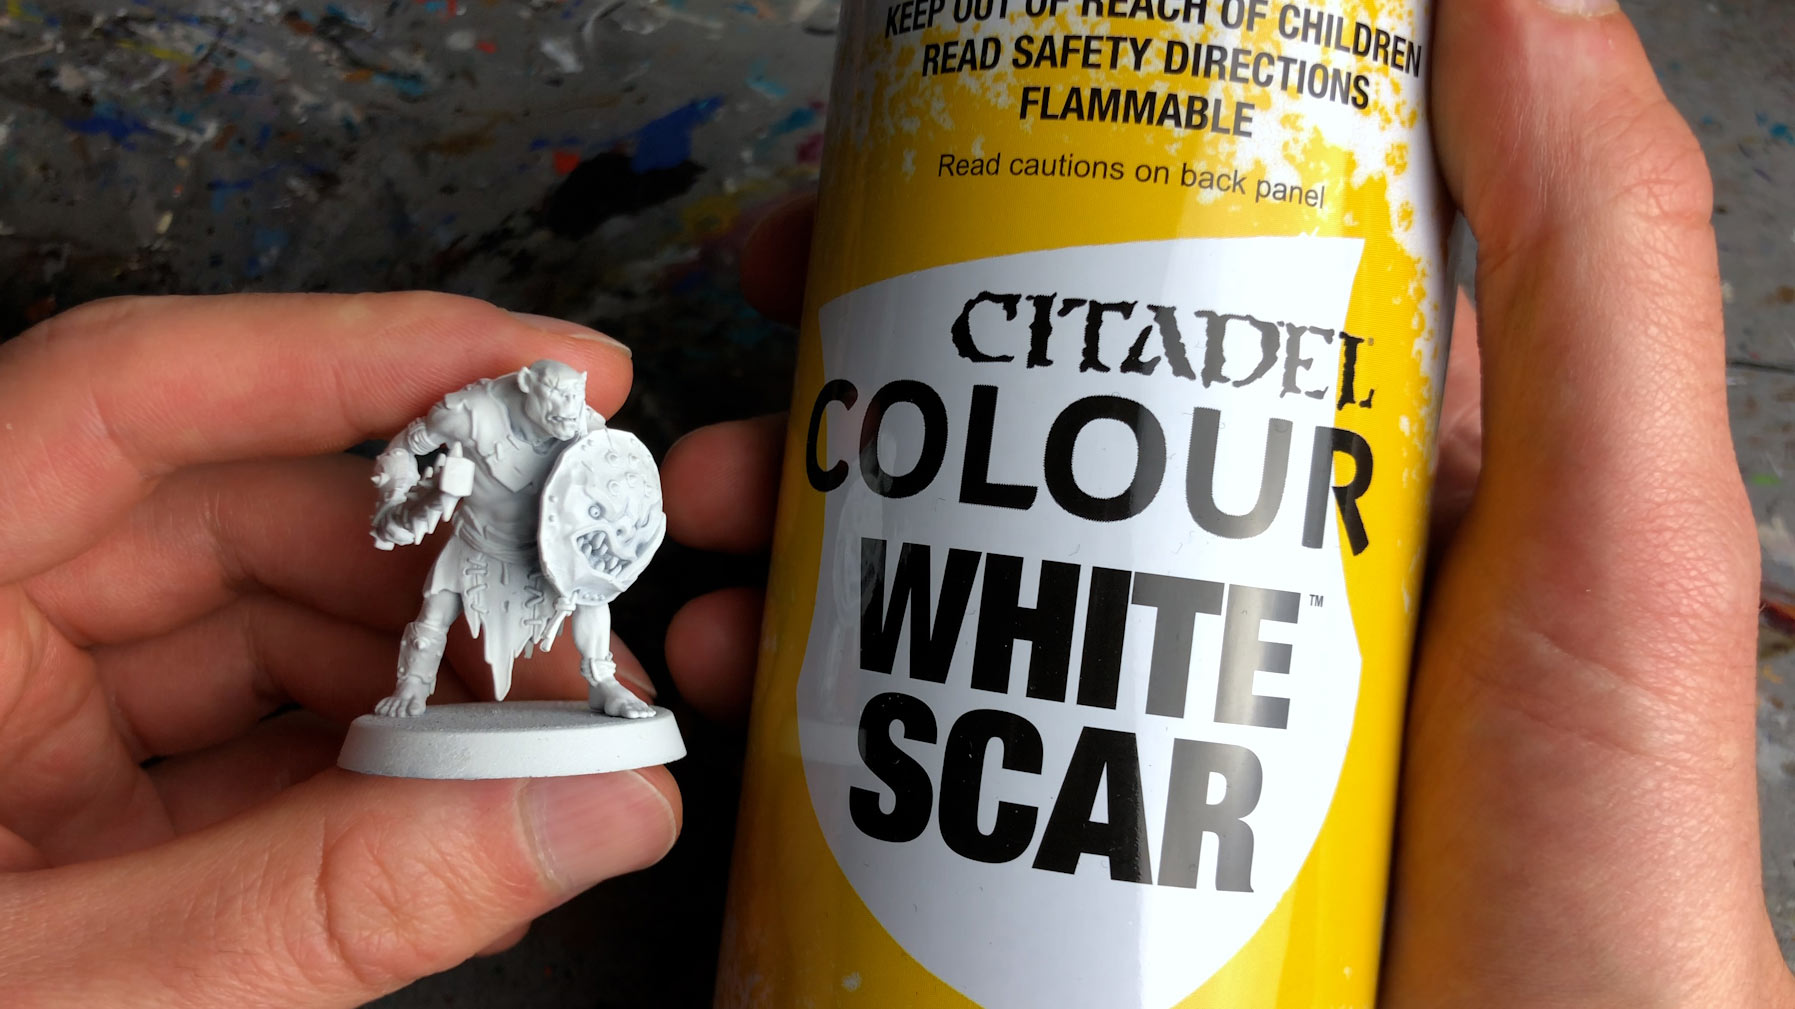 First impression: White Scar spray primer (replacing Corax White